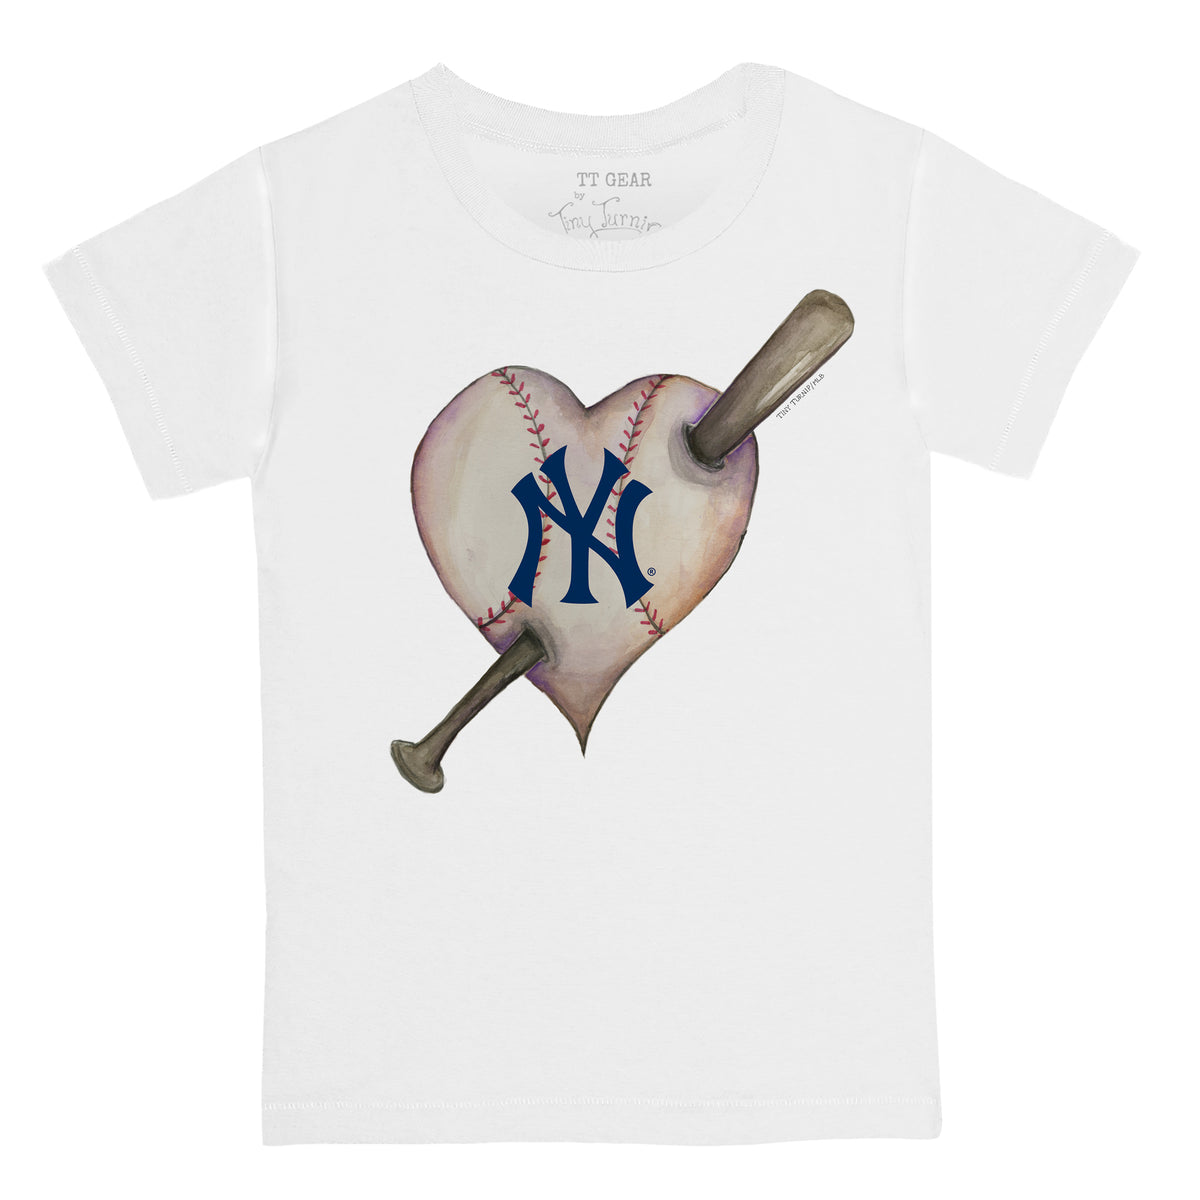 New York Yankees White MLB Shirts for sale